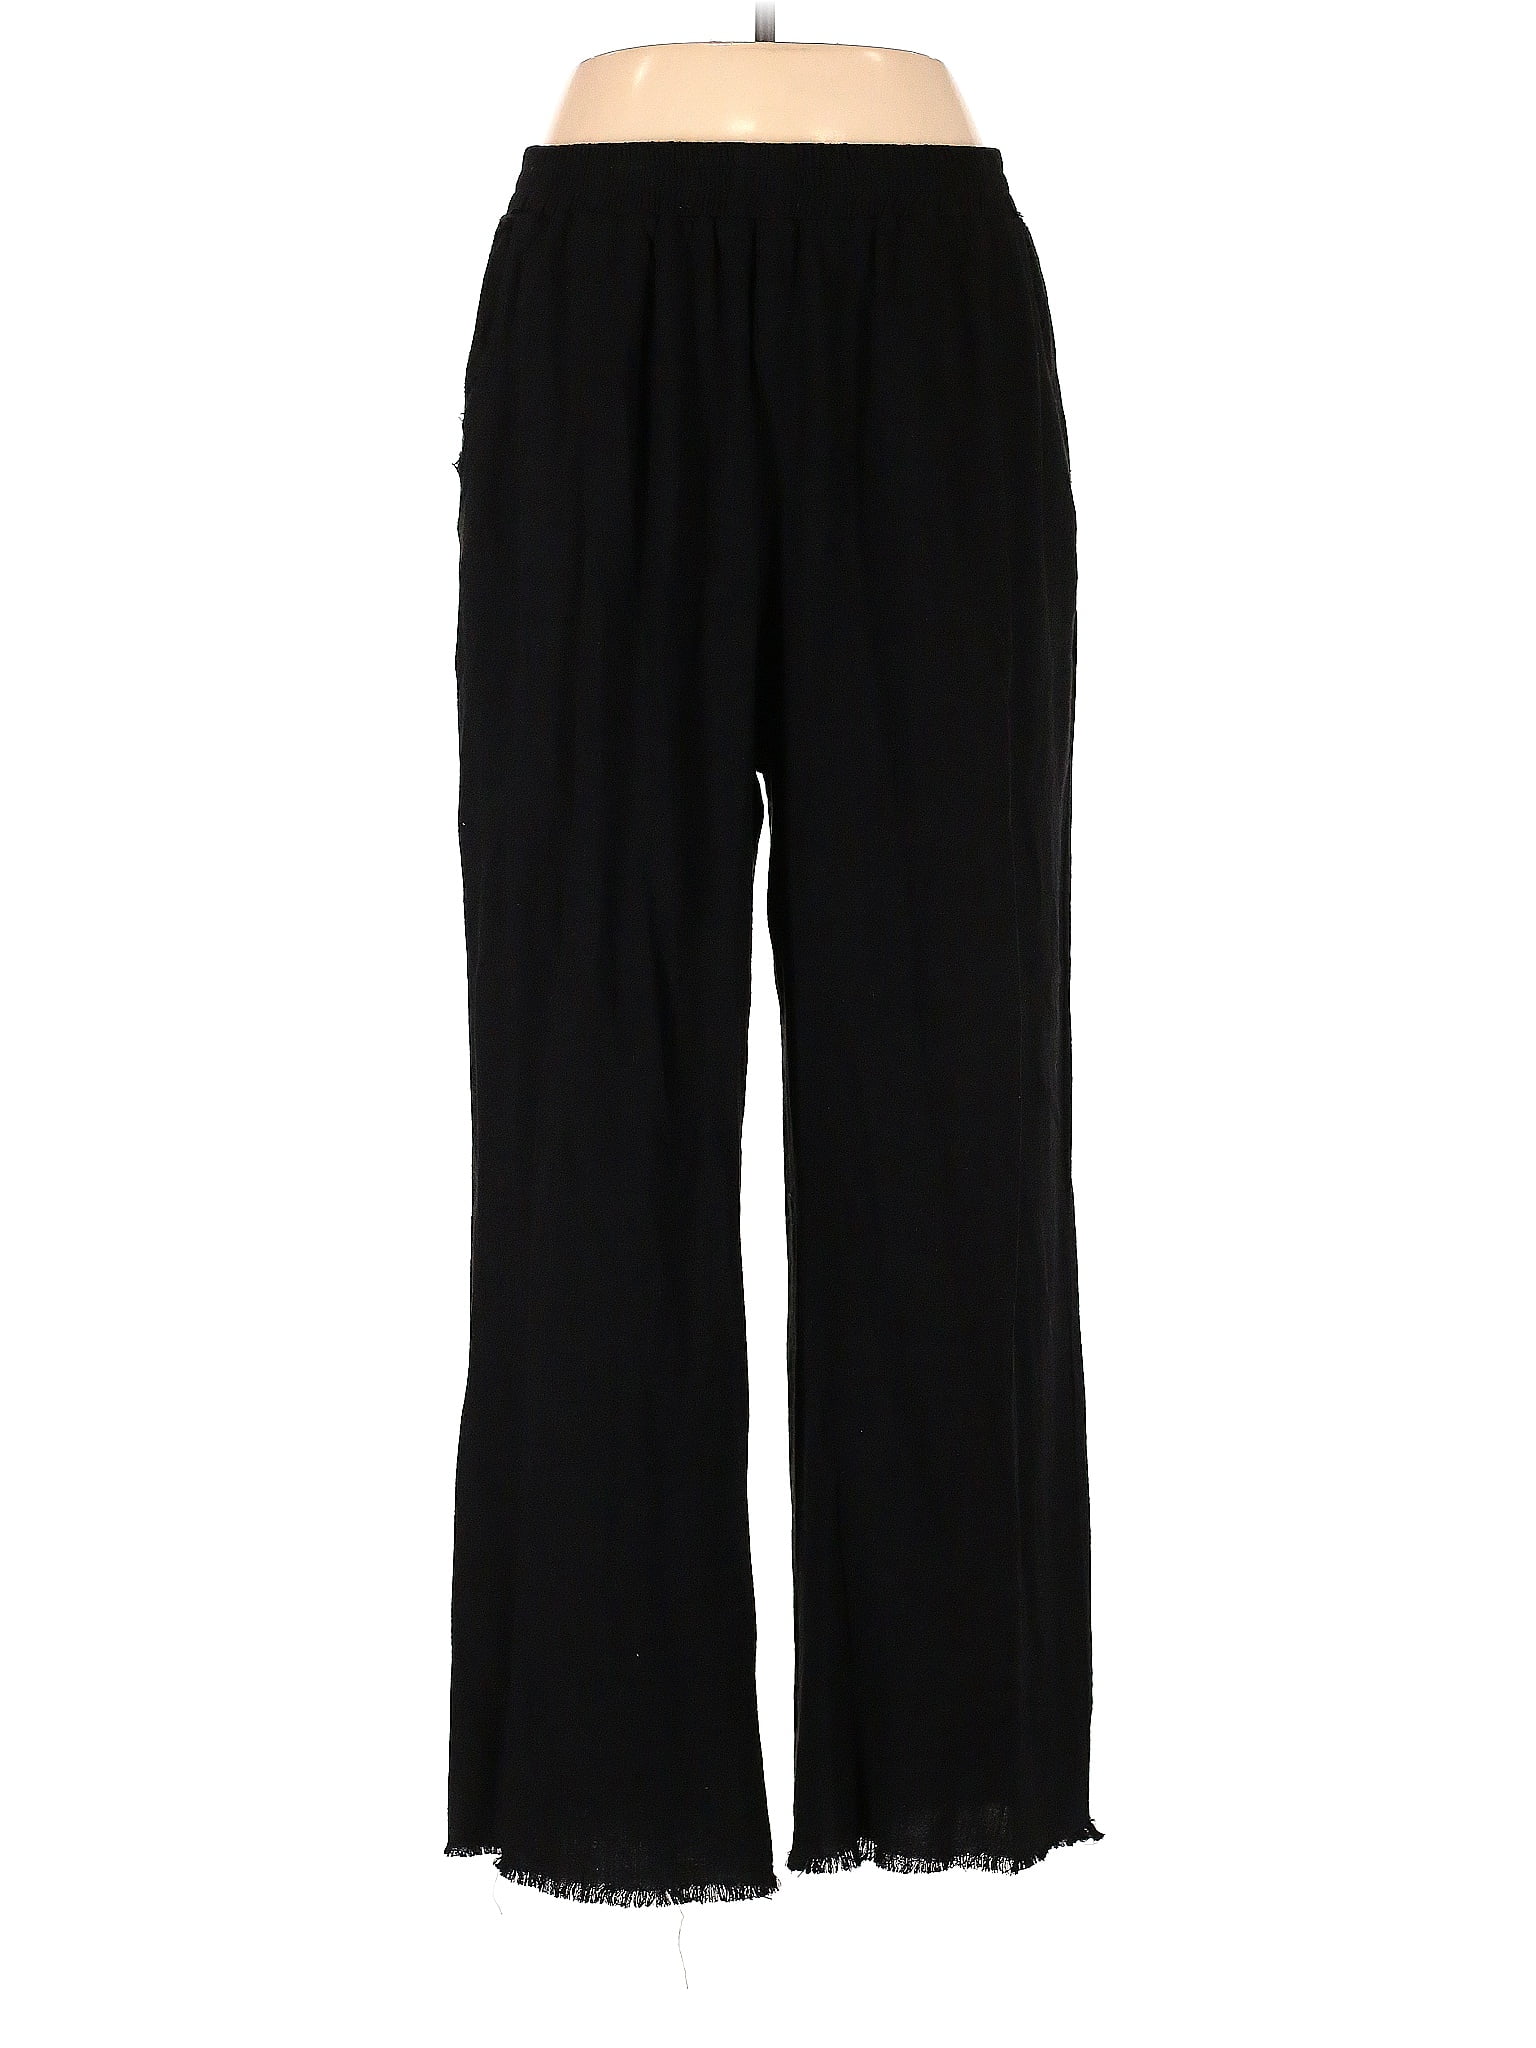 Jodifl Solid Black Casual Pants Size L - 68% off | thredUP